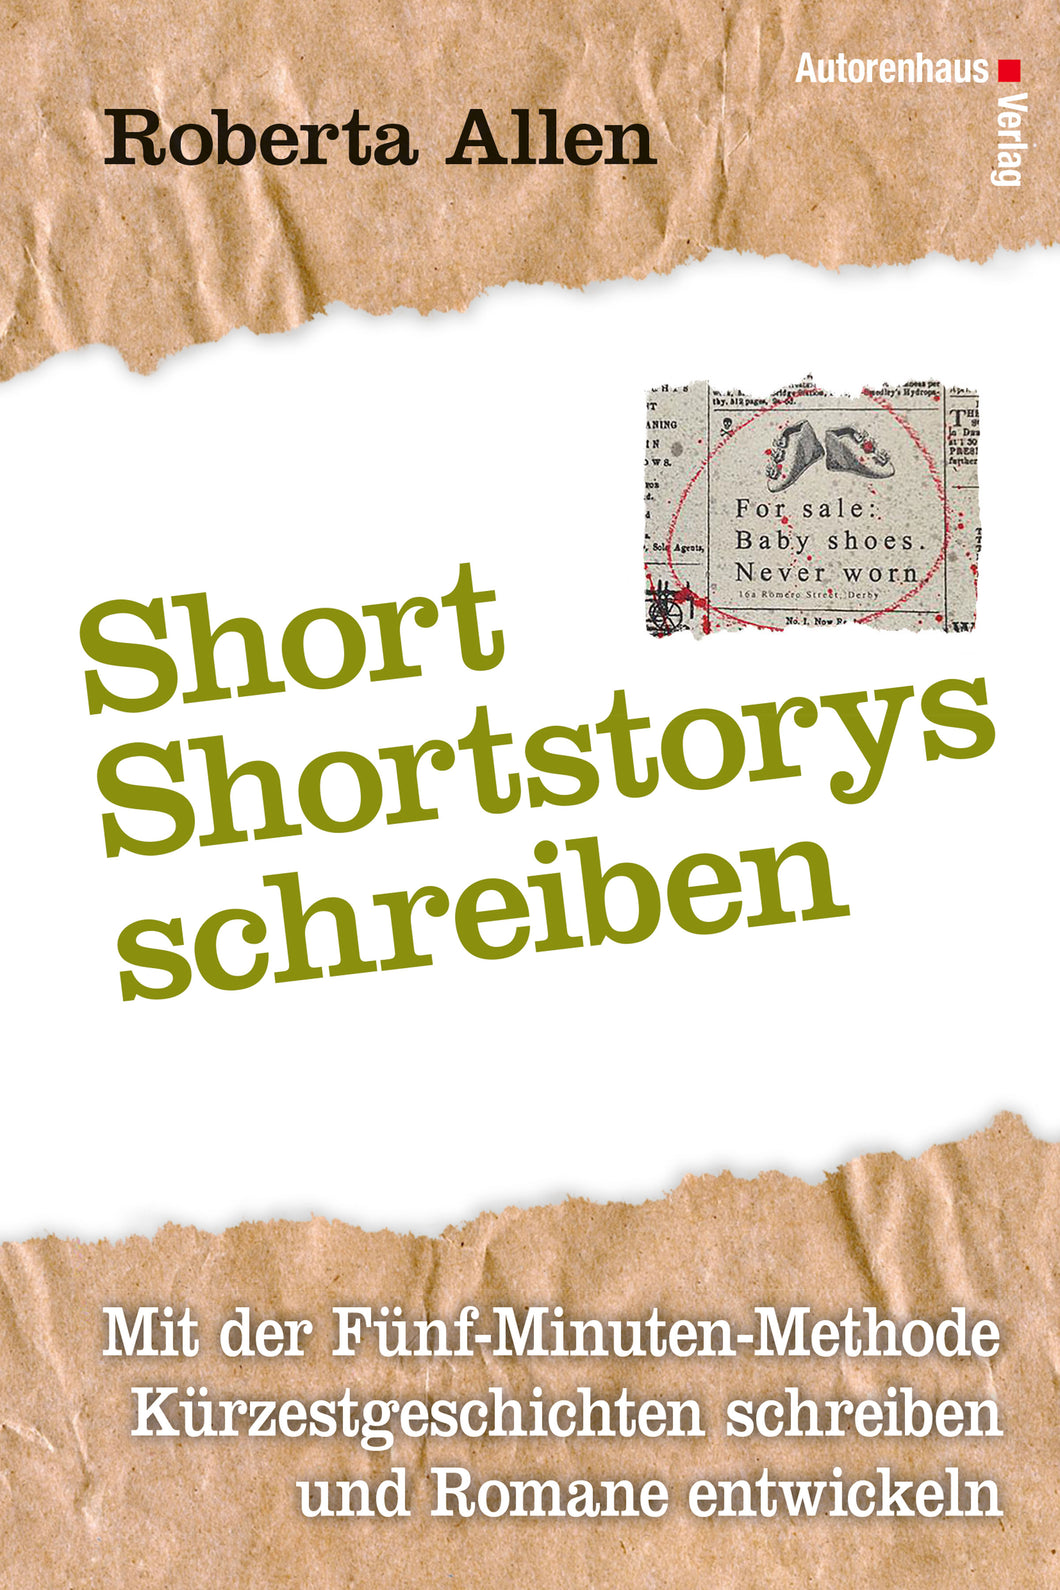 Roberta Allen: Short Short Storys schreiben